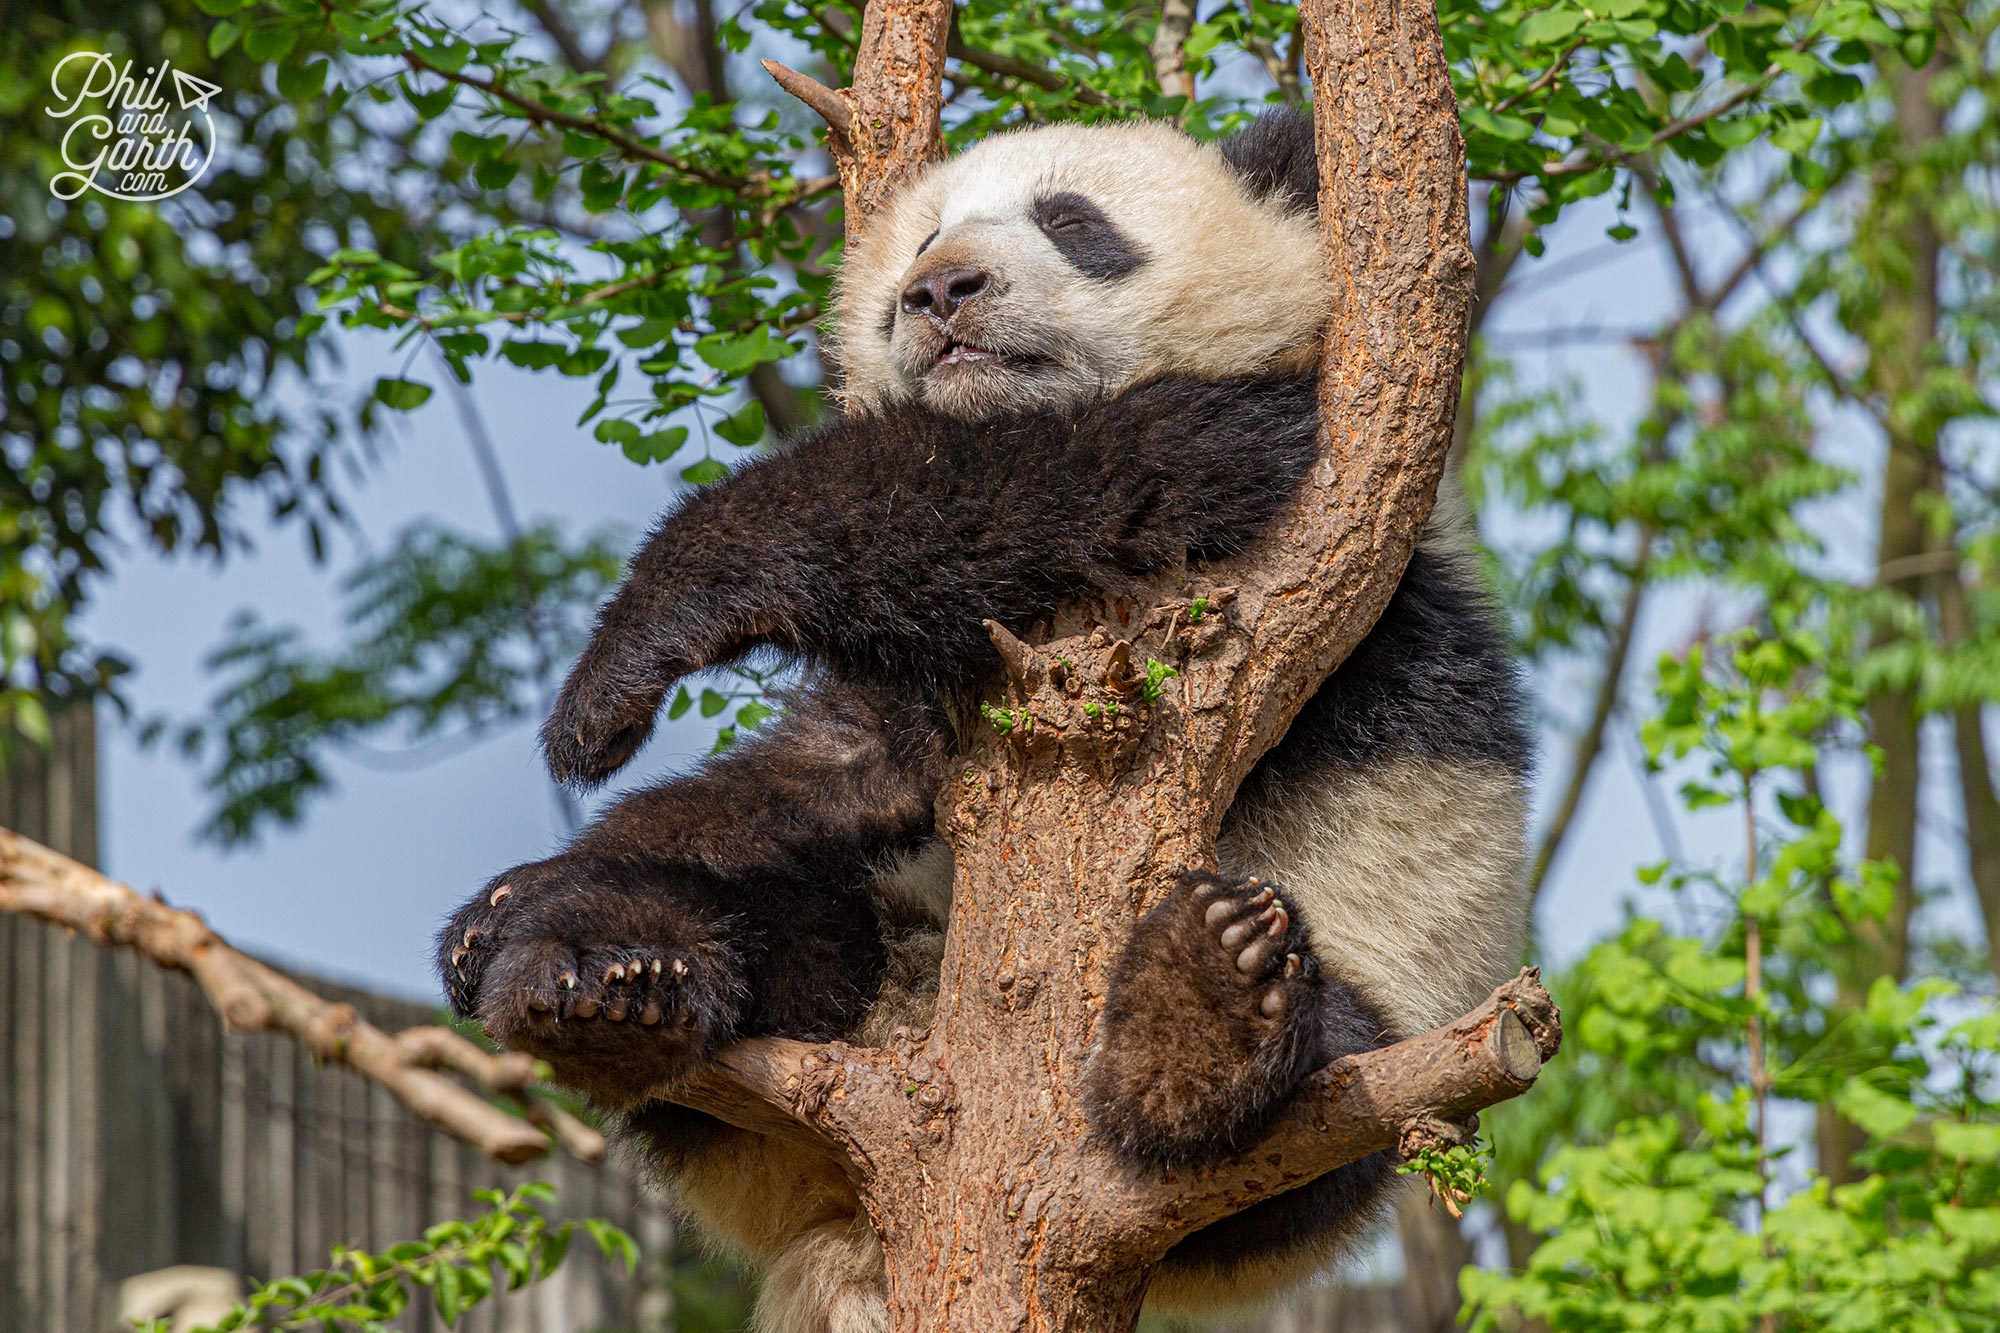 How cute is the baby panda asleep?